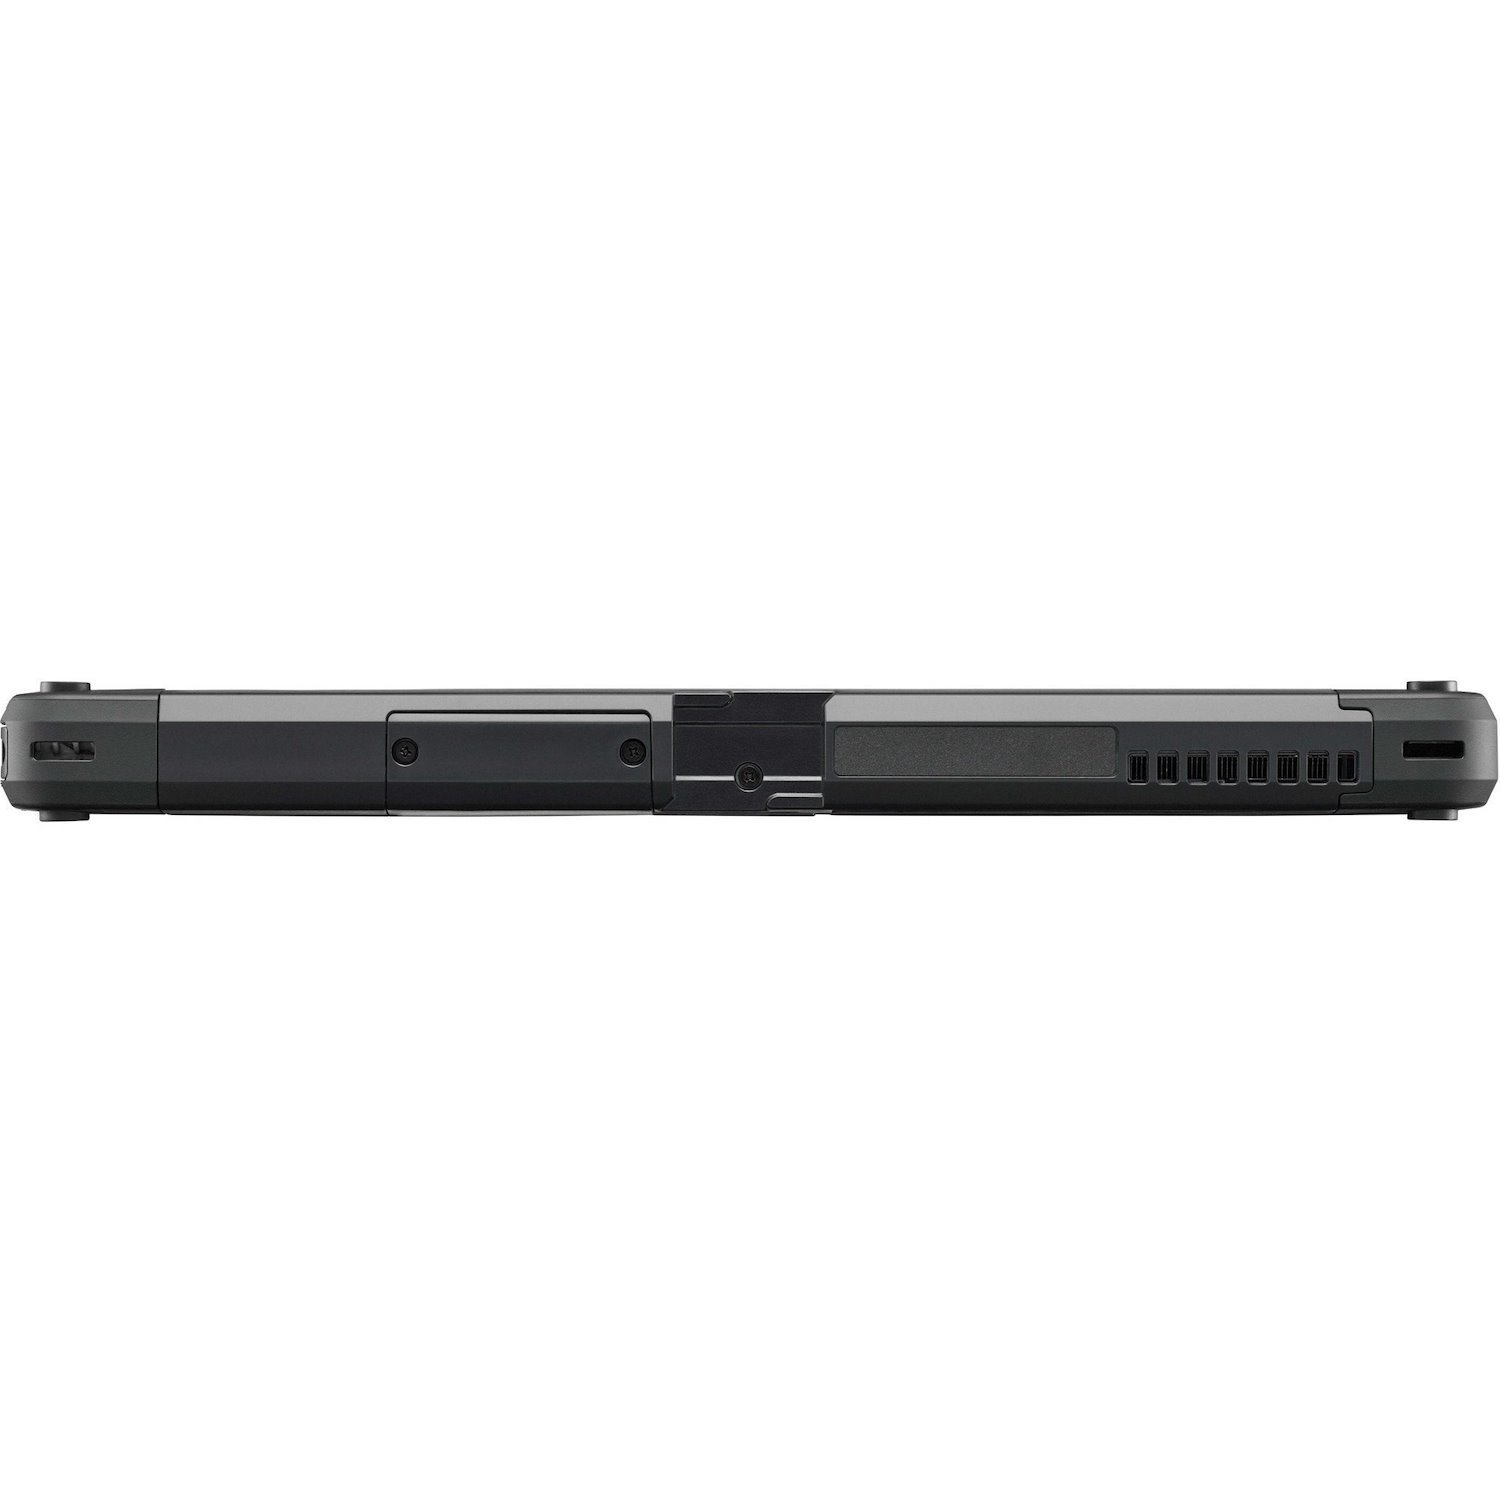 Panasonic TOUGHBOOK CF-33 Rugged Tablet - 12" QHD - 16 GB - 512 GB SSD - Windows 10 Pro 64-bit - 4G